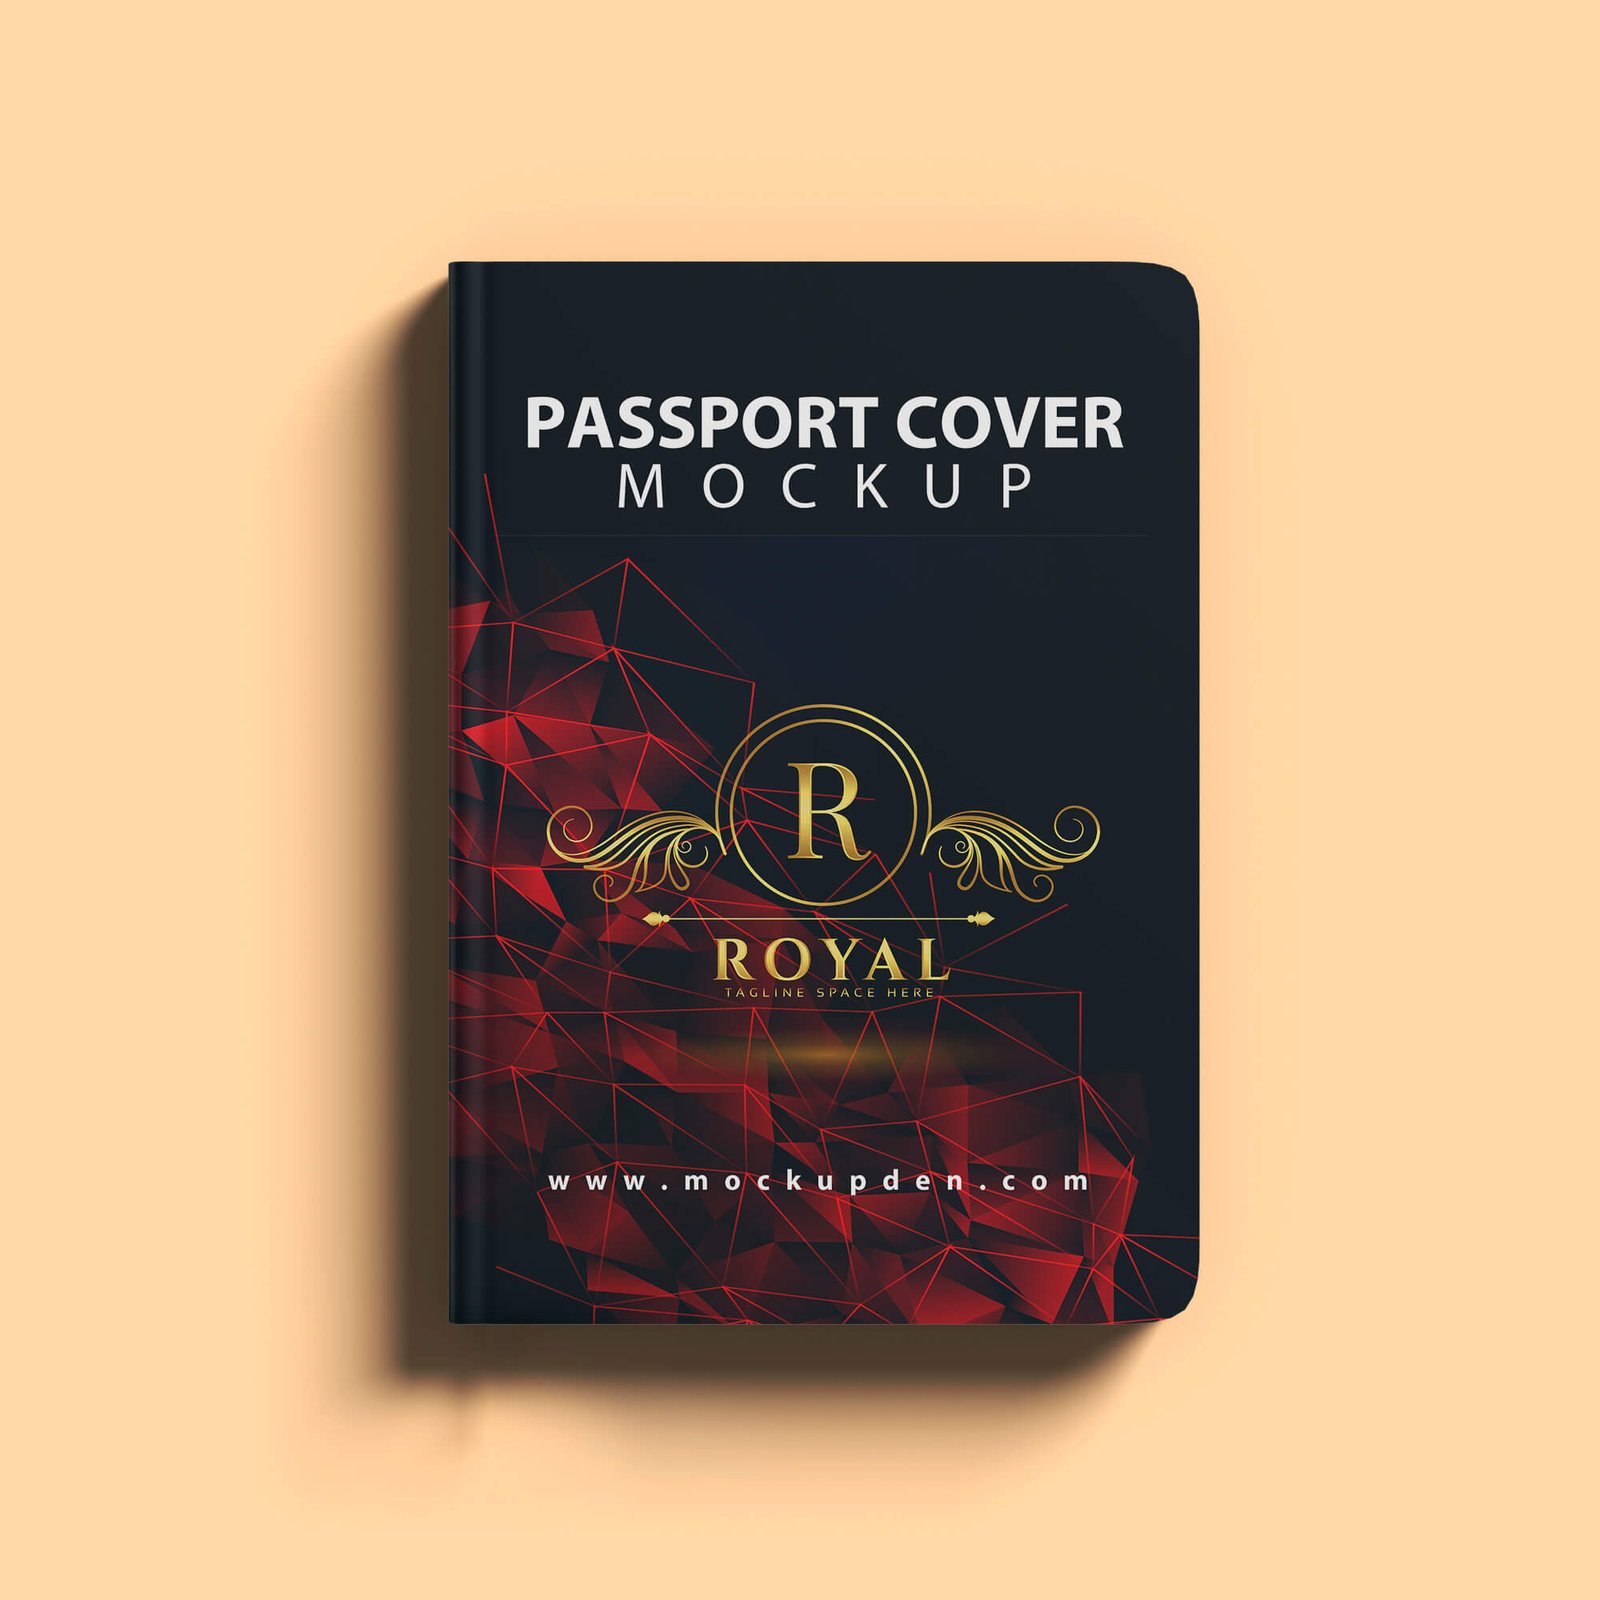 Design Free Passport Cover Mockup PSD Template